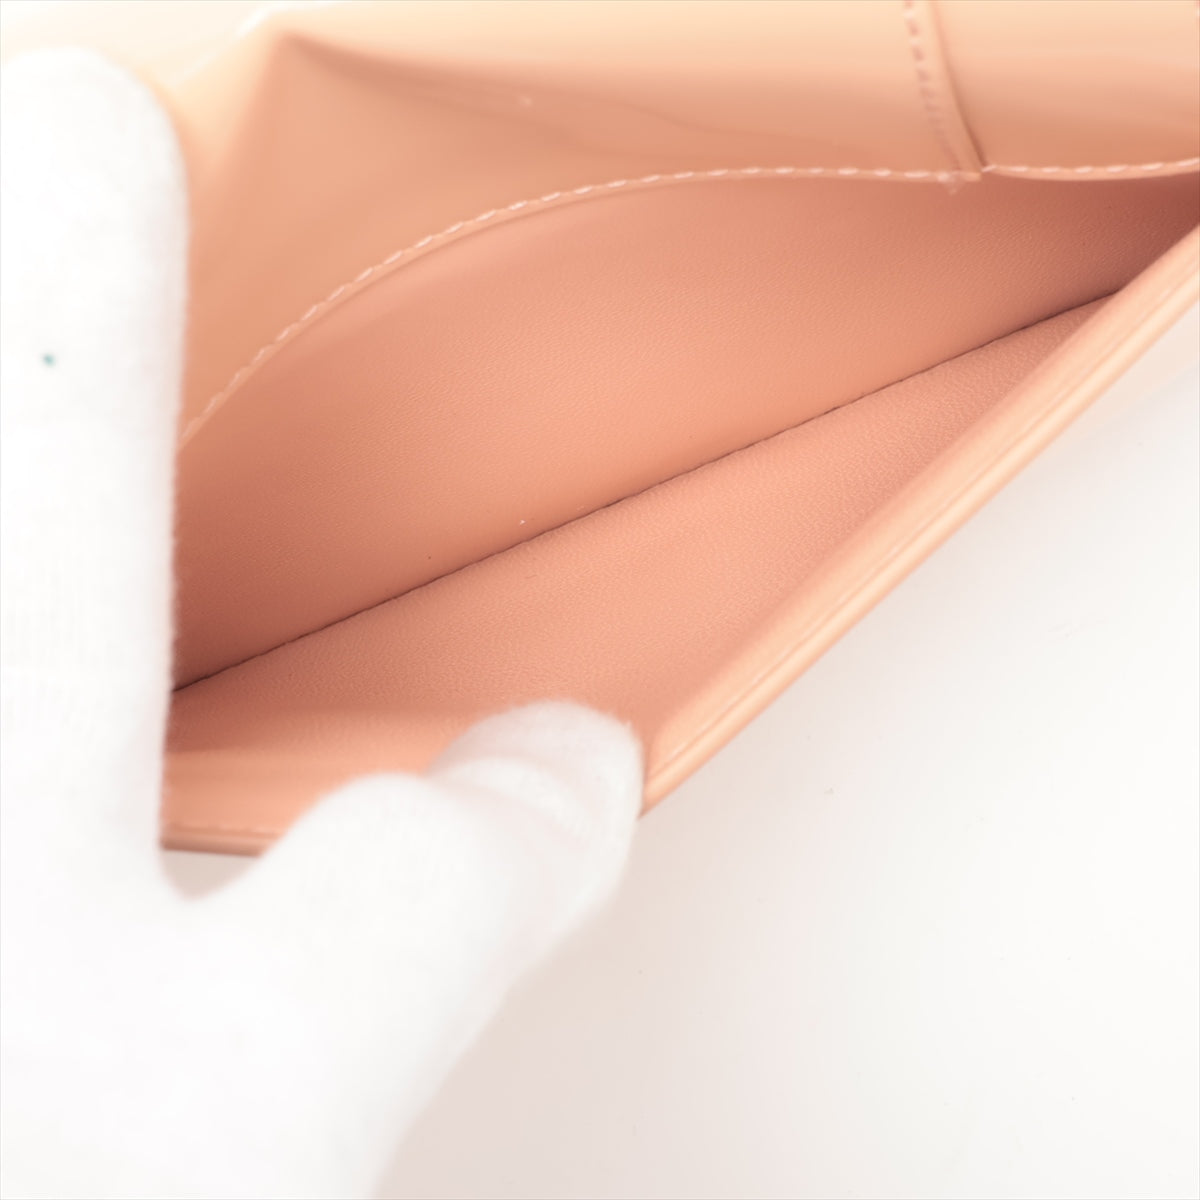 Bulgari Selpenti Patent Leather Shoulder Bag Pink Beige Mirrored